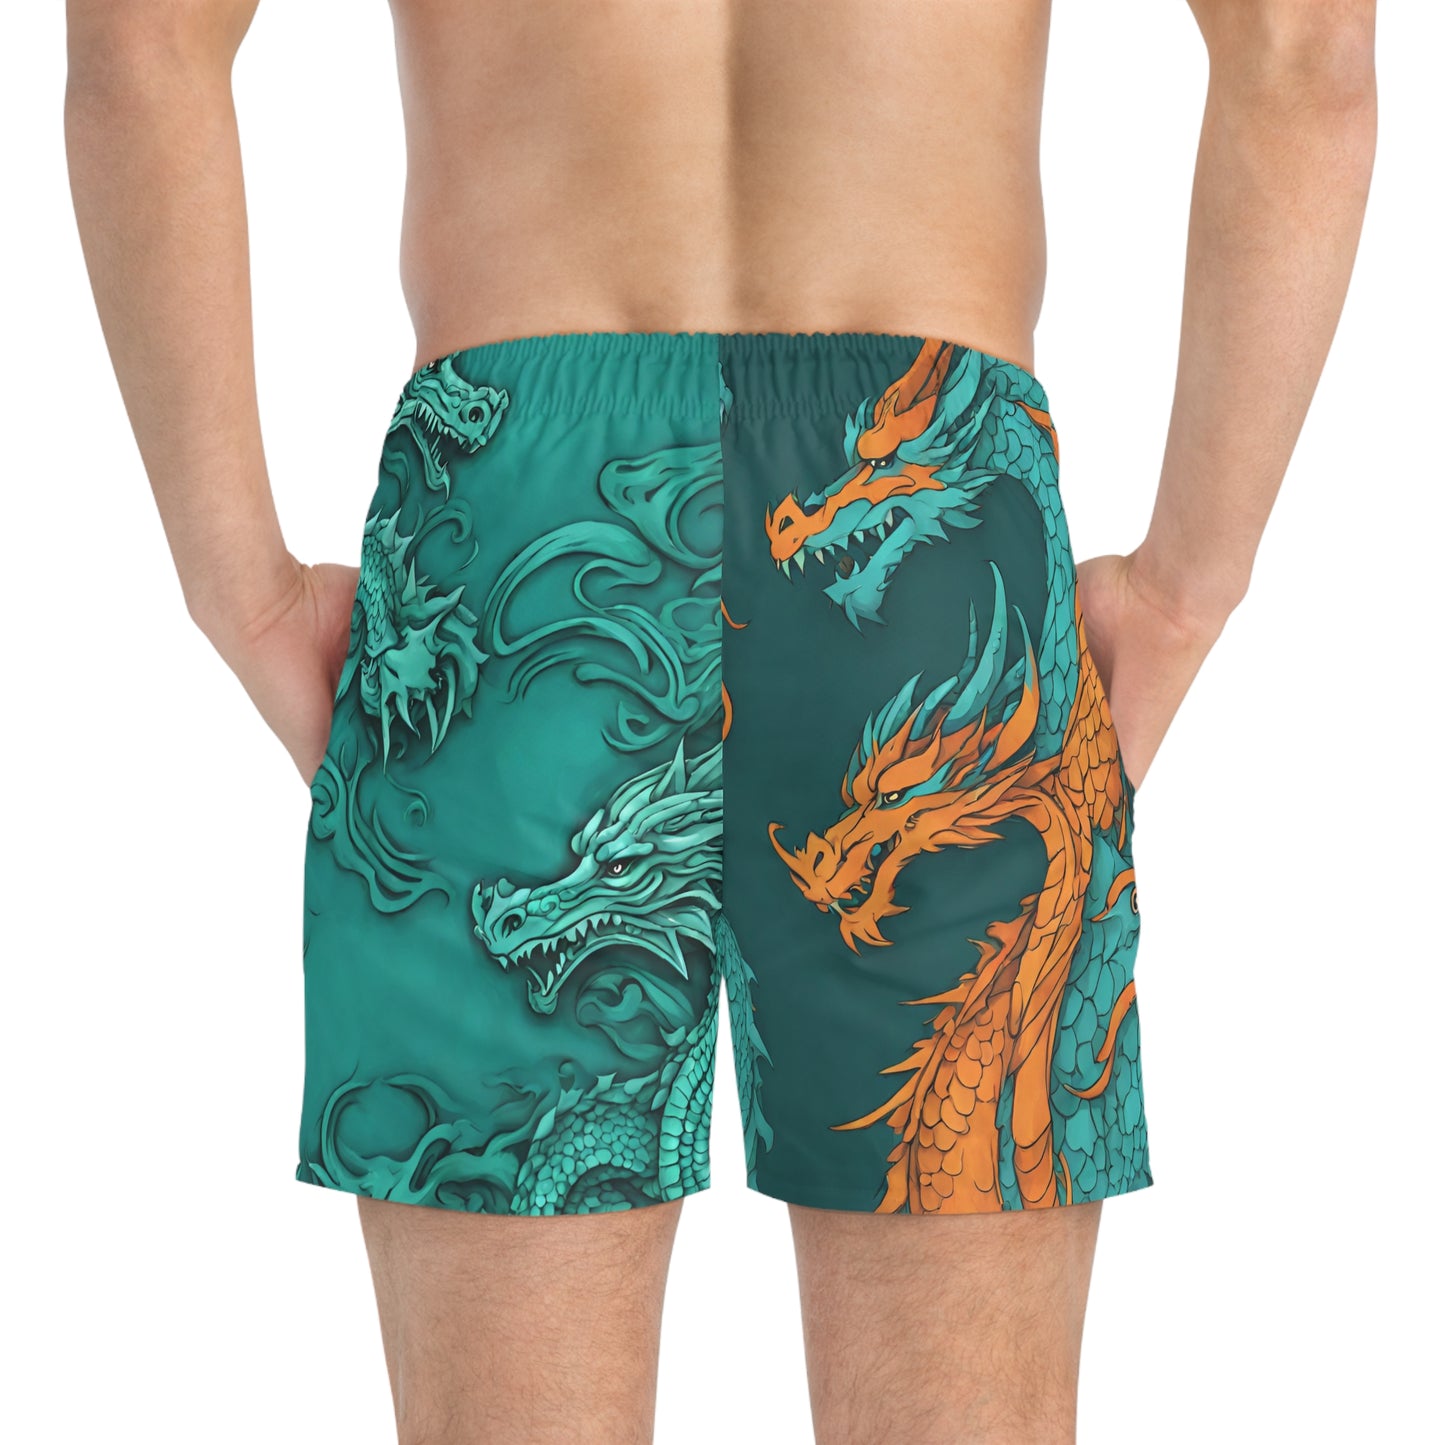 Men's "Unleash the Dragon" Swim Trunks